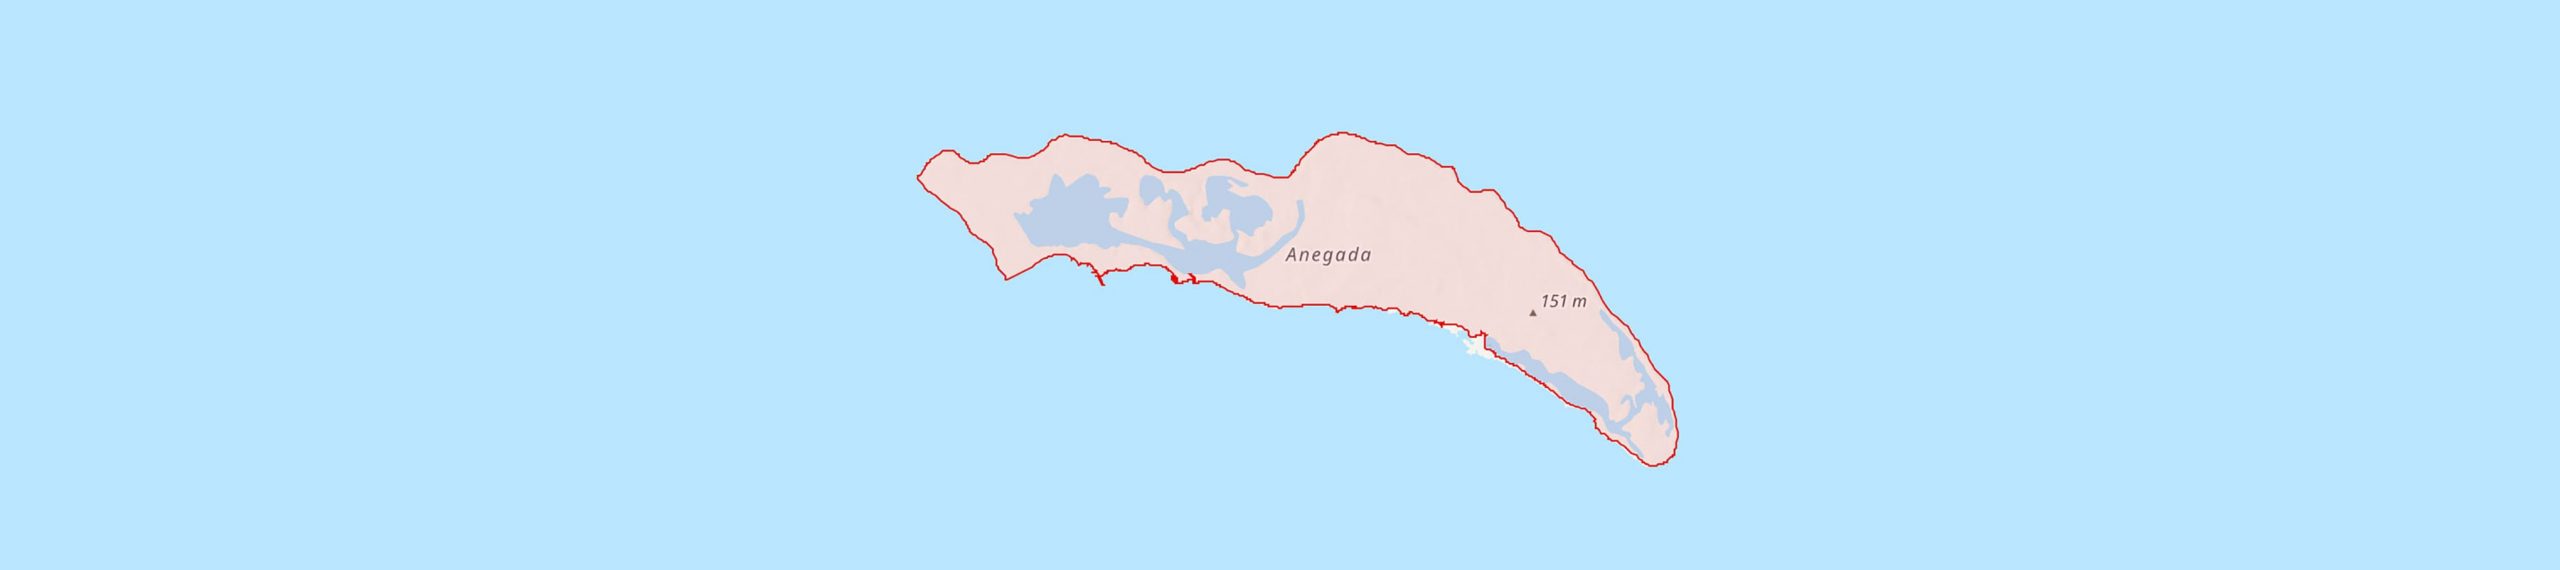 Anegada Island